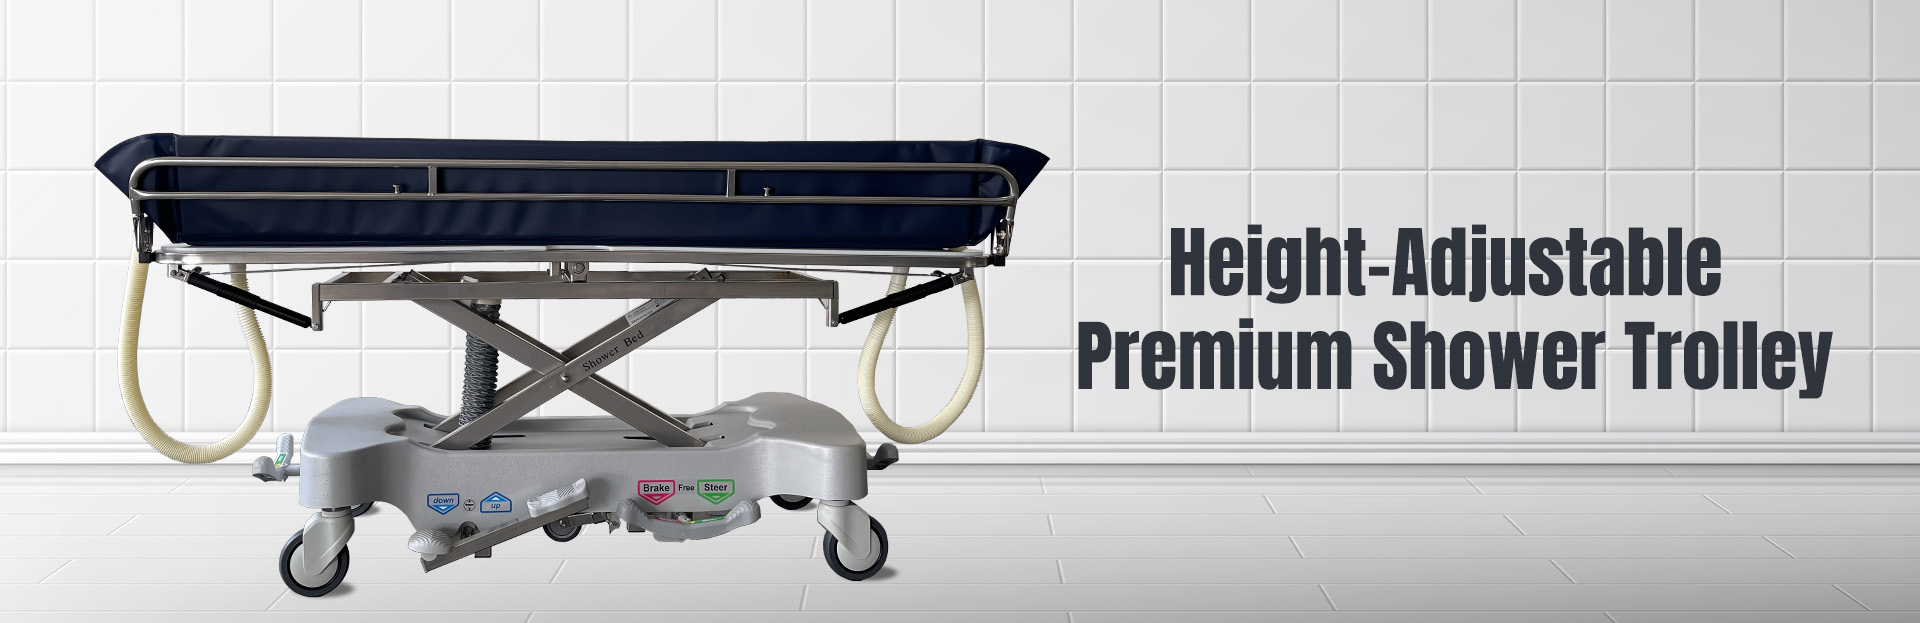 assure rehab premium shower trolley singapore brand